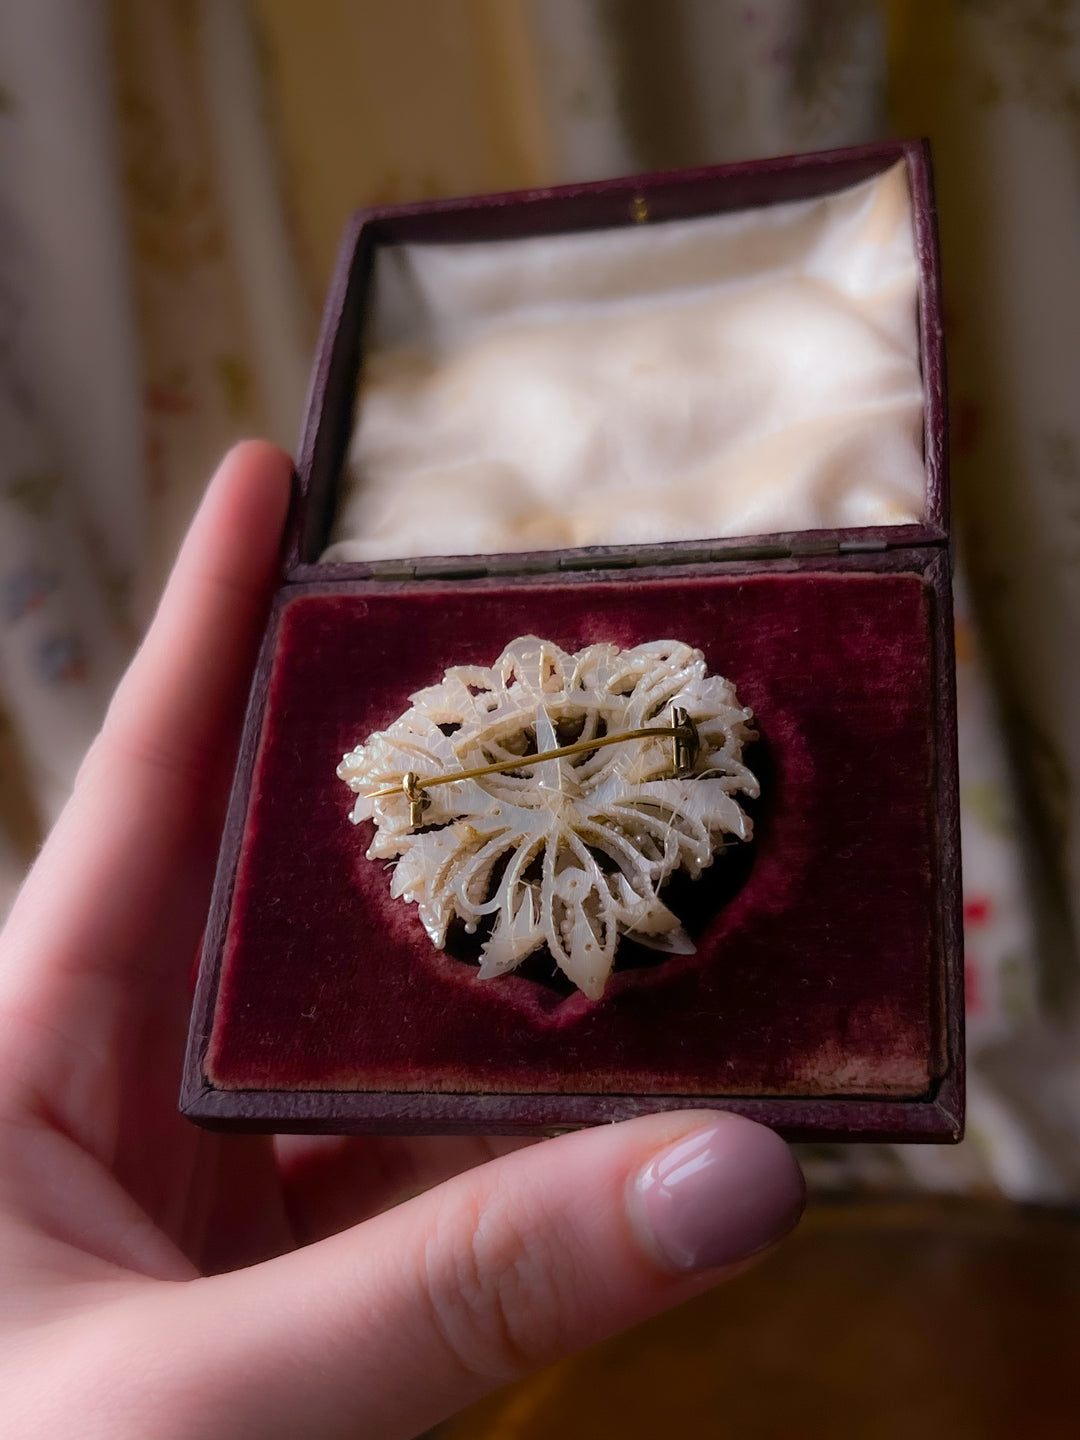 Rare Pearl Weddingwork Brooch in the Original Box c. 1830